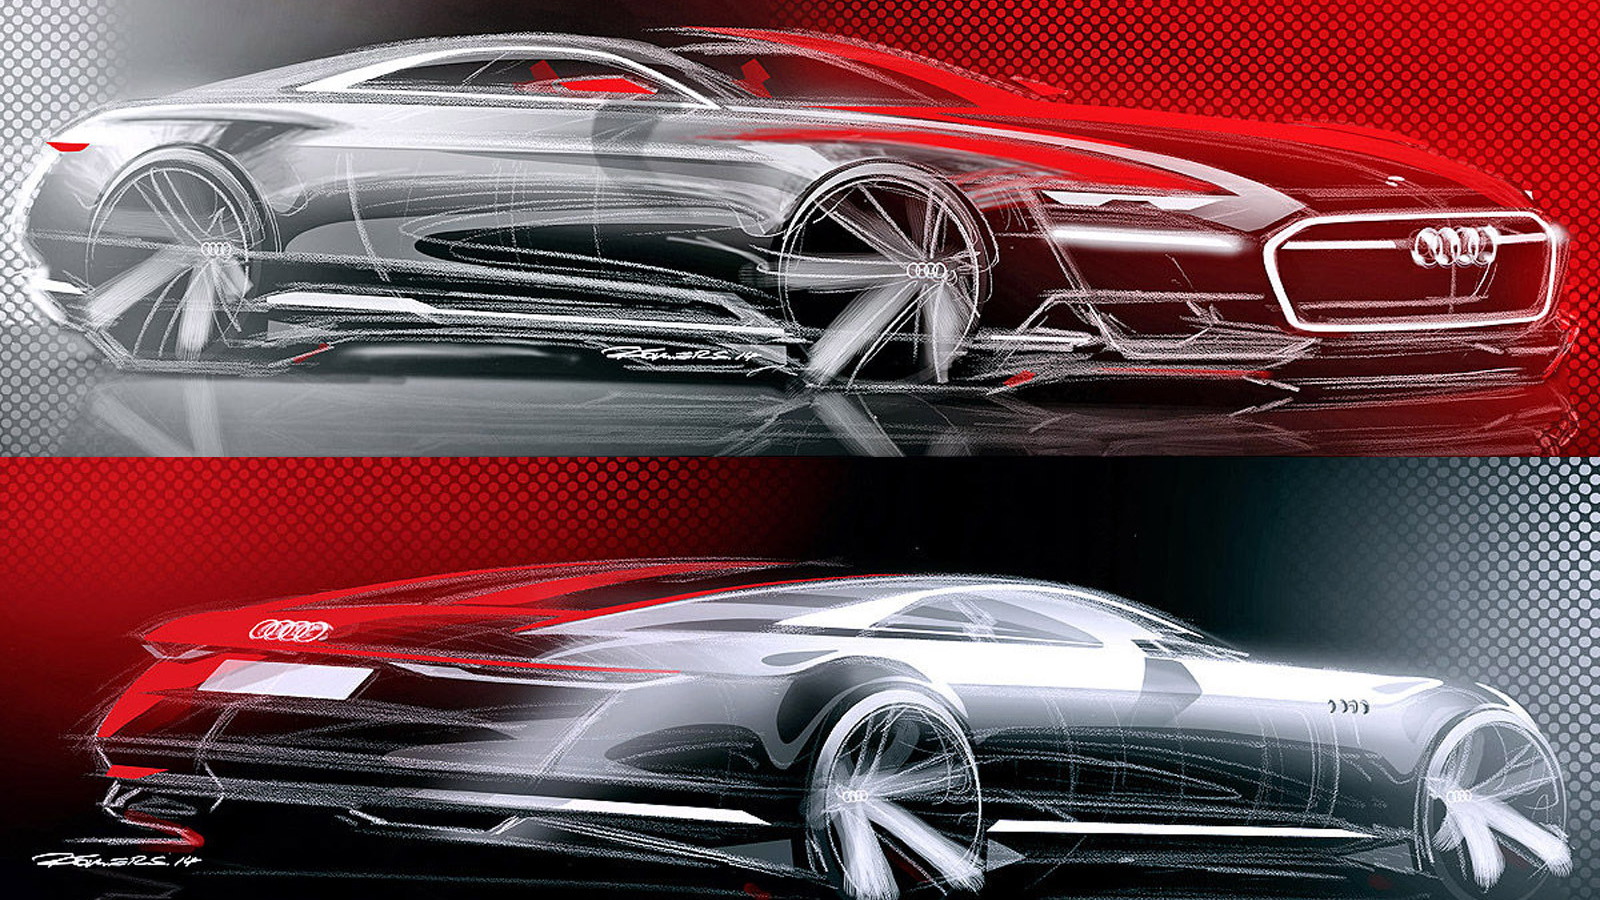 Teaser sketch for Audi Prologue concept (Image via Auto Bild)